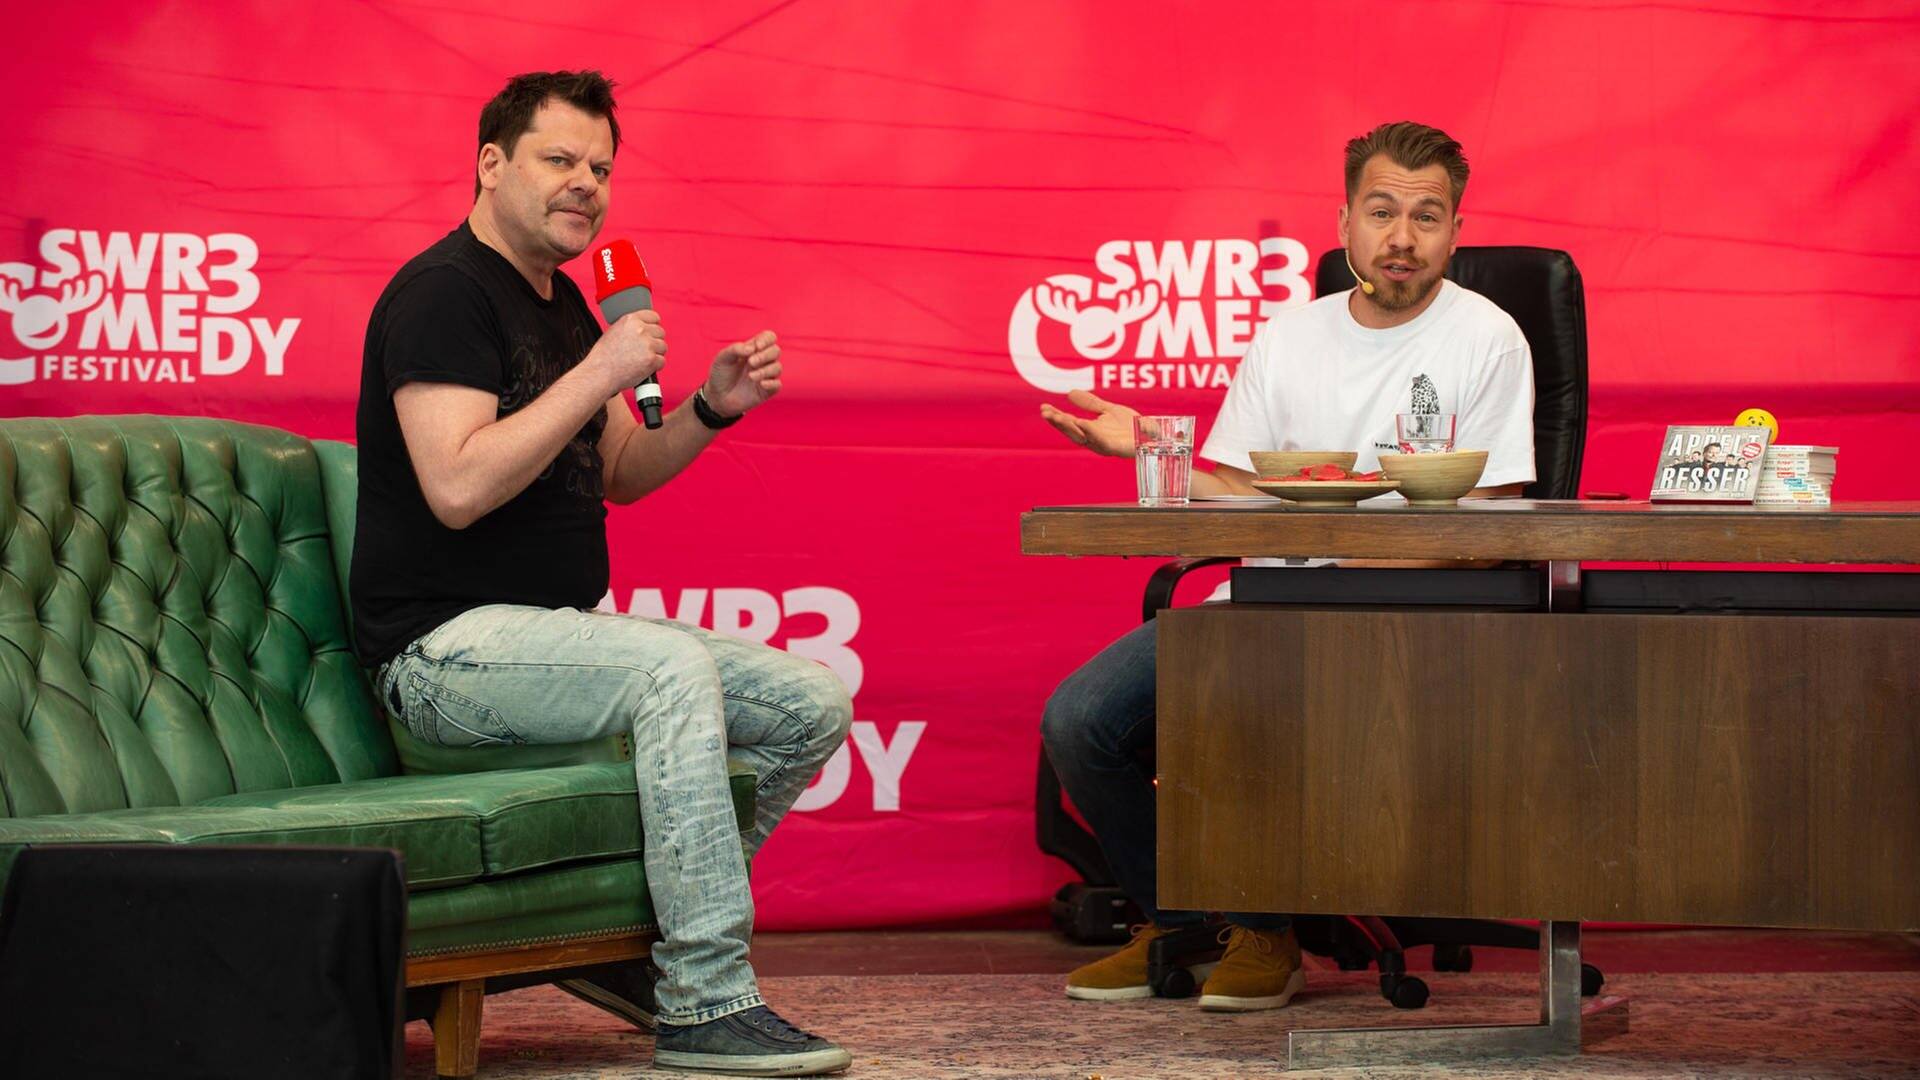 Ingo Appelt - SWR3 Comedy Festival 2018 (Foto: SWR3)